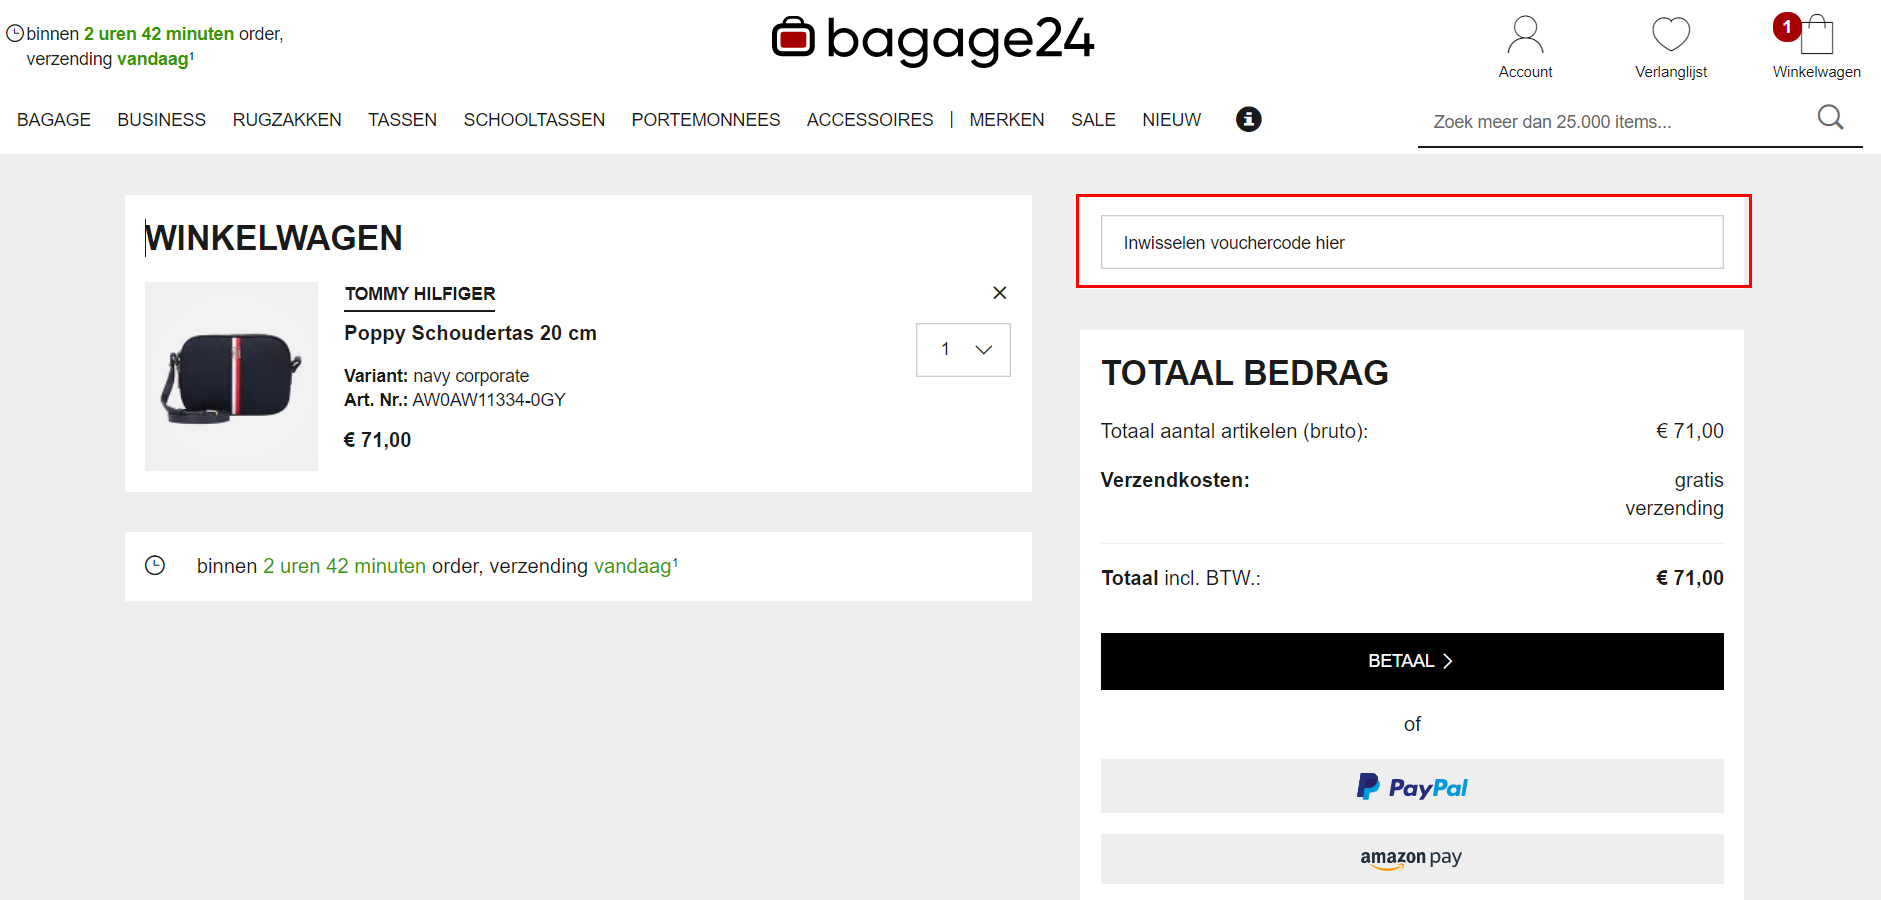 Bagage24 kortingscode gebruiken